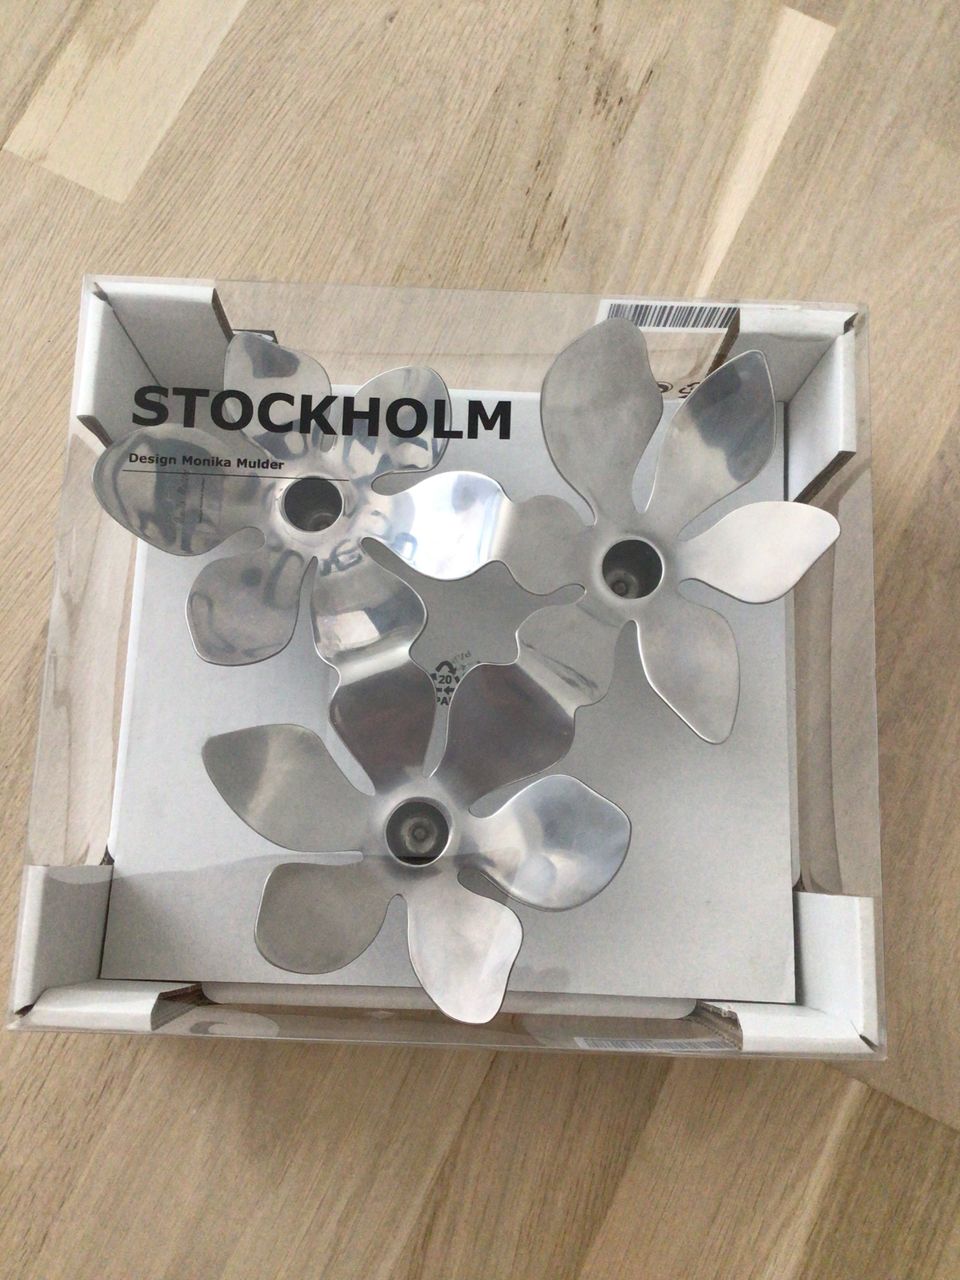 Ikea Stockholm kynttilänjalka